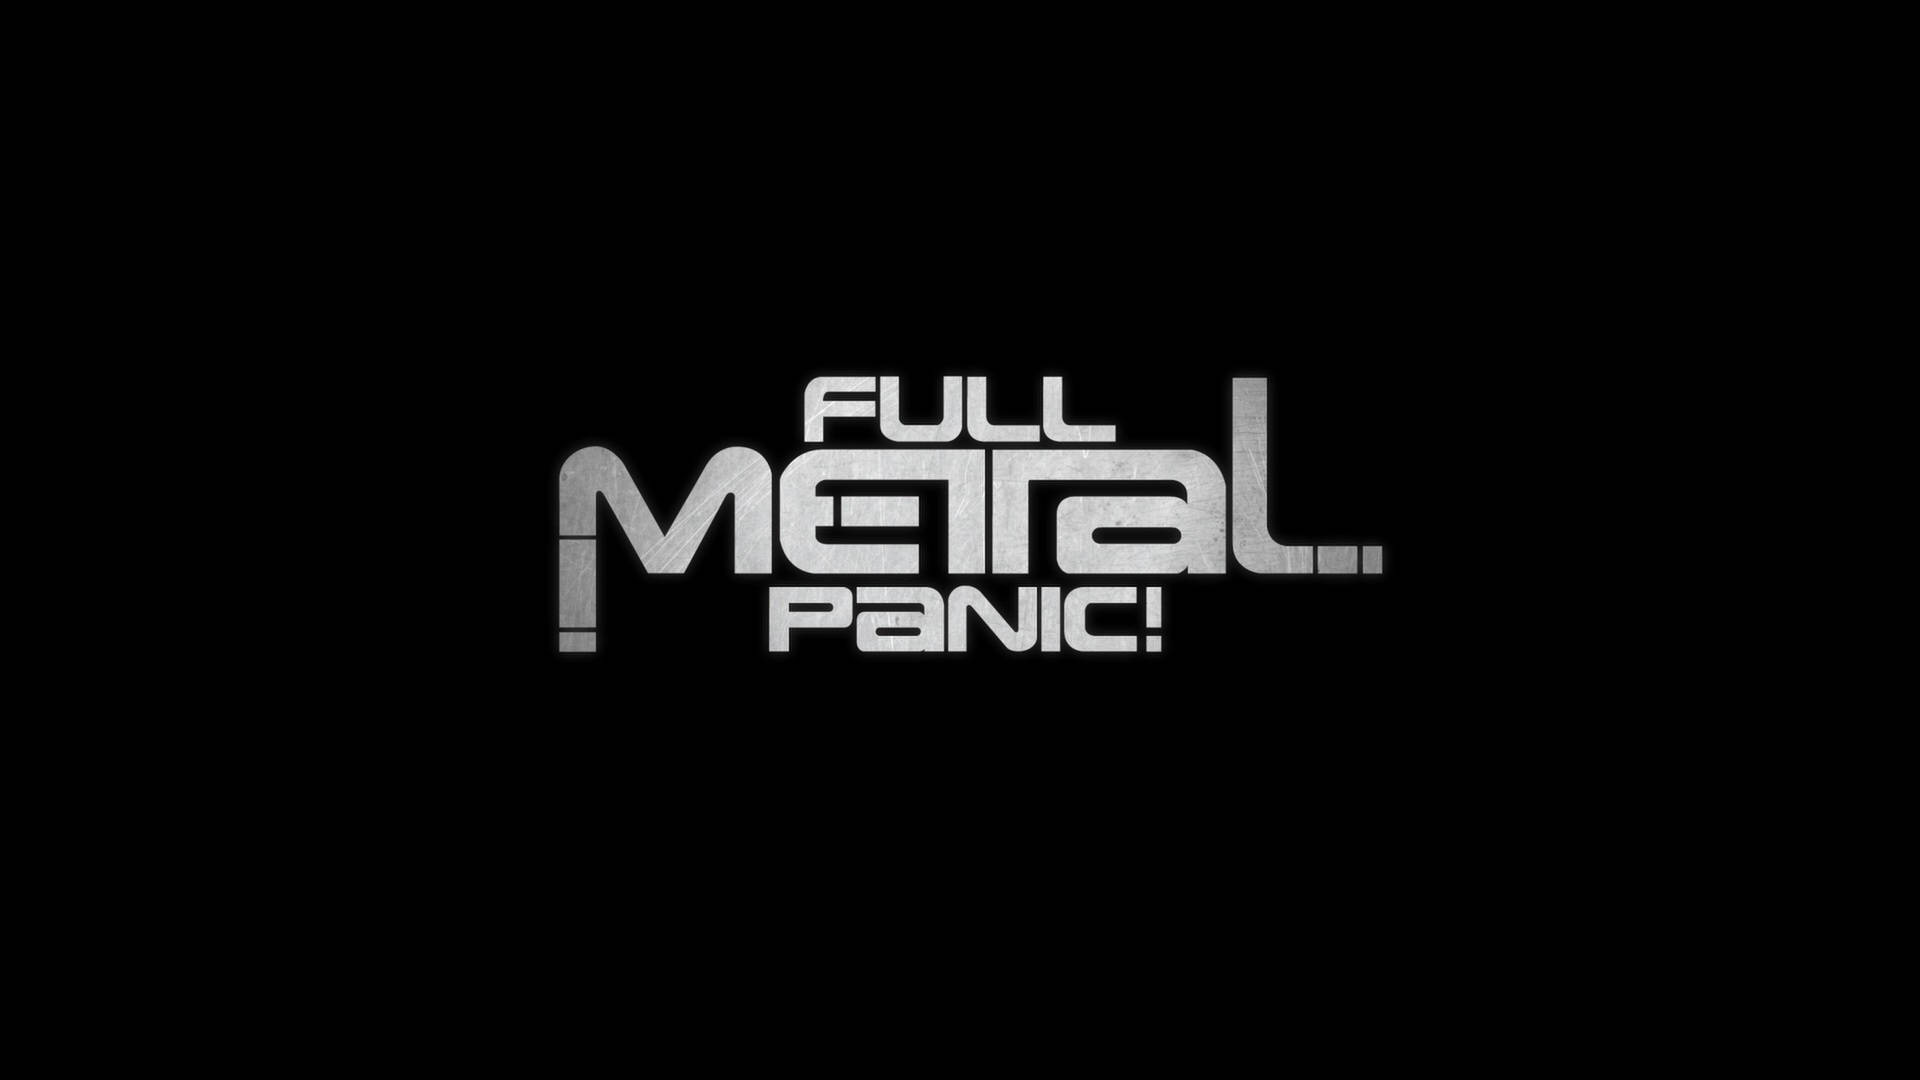 Metallischesfull Metal Panic Poster Wallpaper